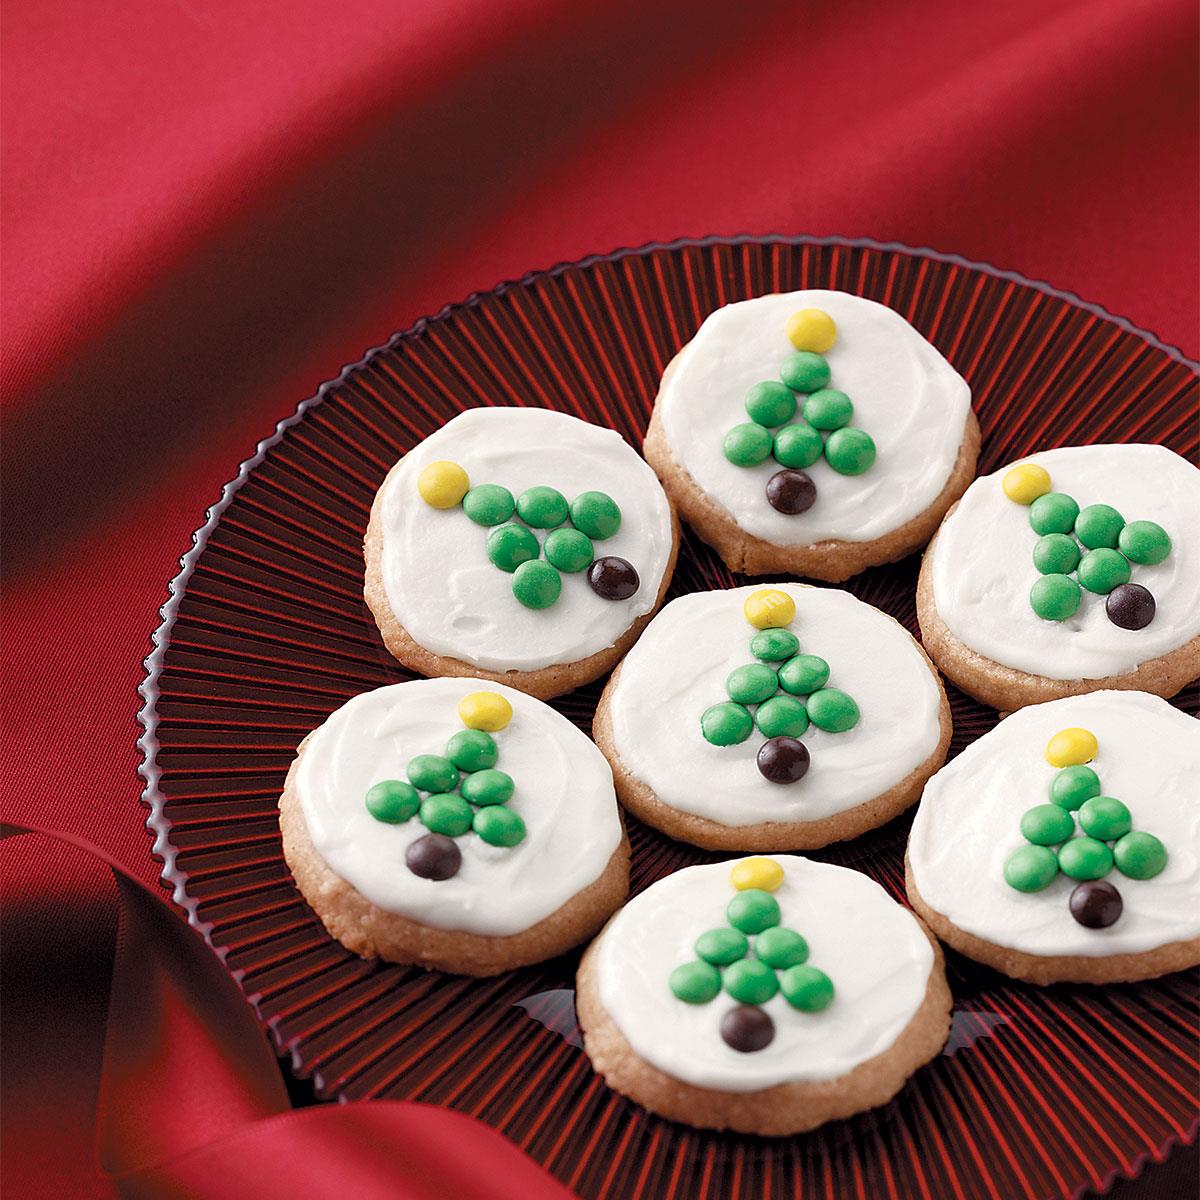 Lemon Christmas Cookies - Lemon Crinkle Cookies Lauren S Latest - These lemon thumbprint cookies are the perfect holiday cookies.